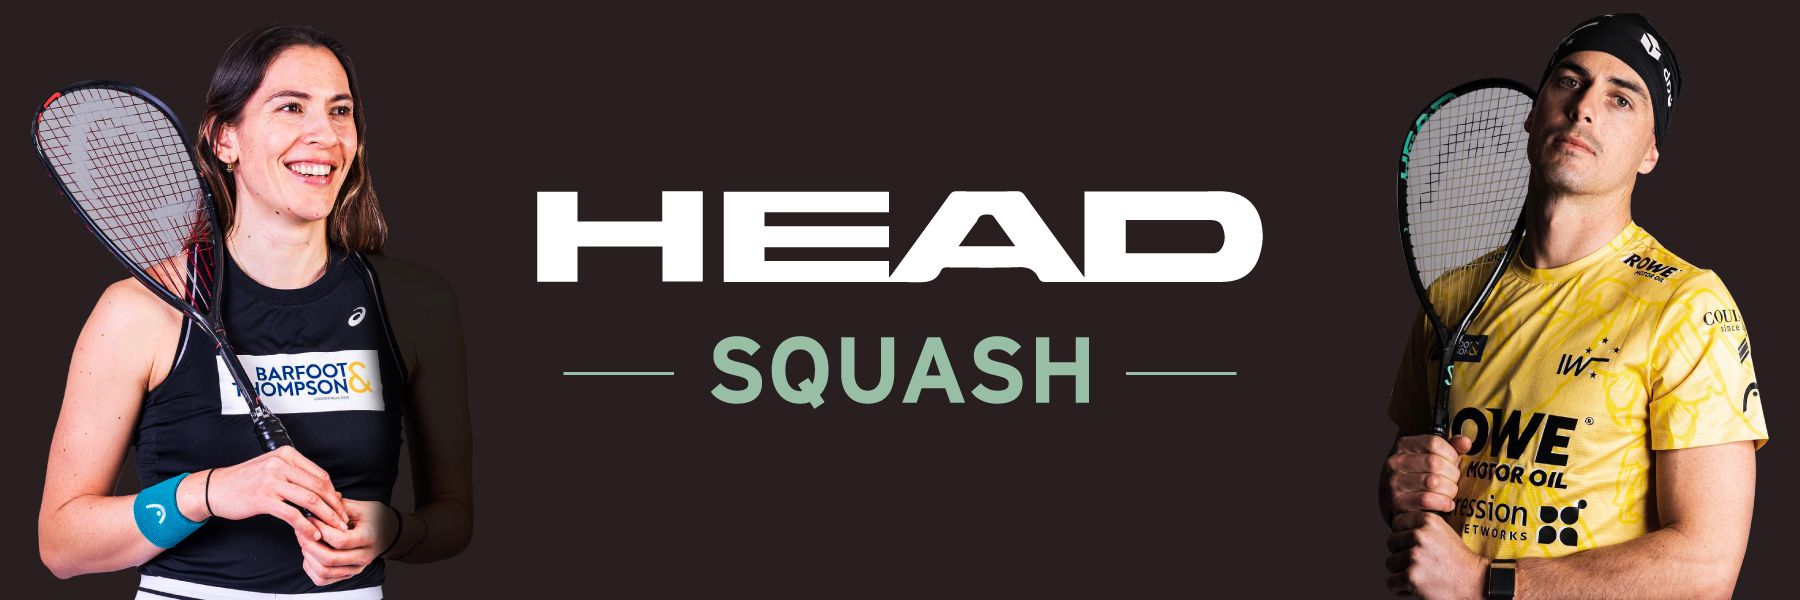 Head Squash